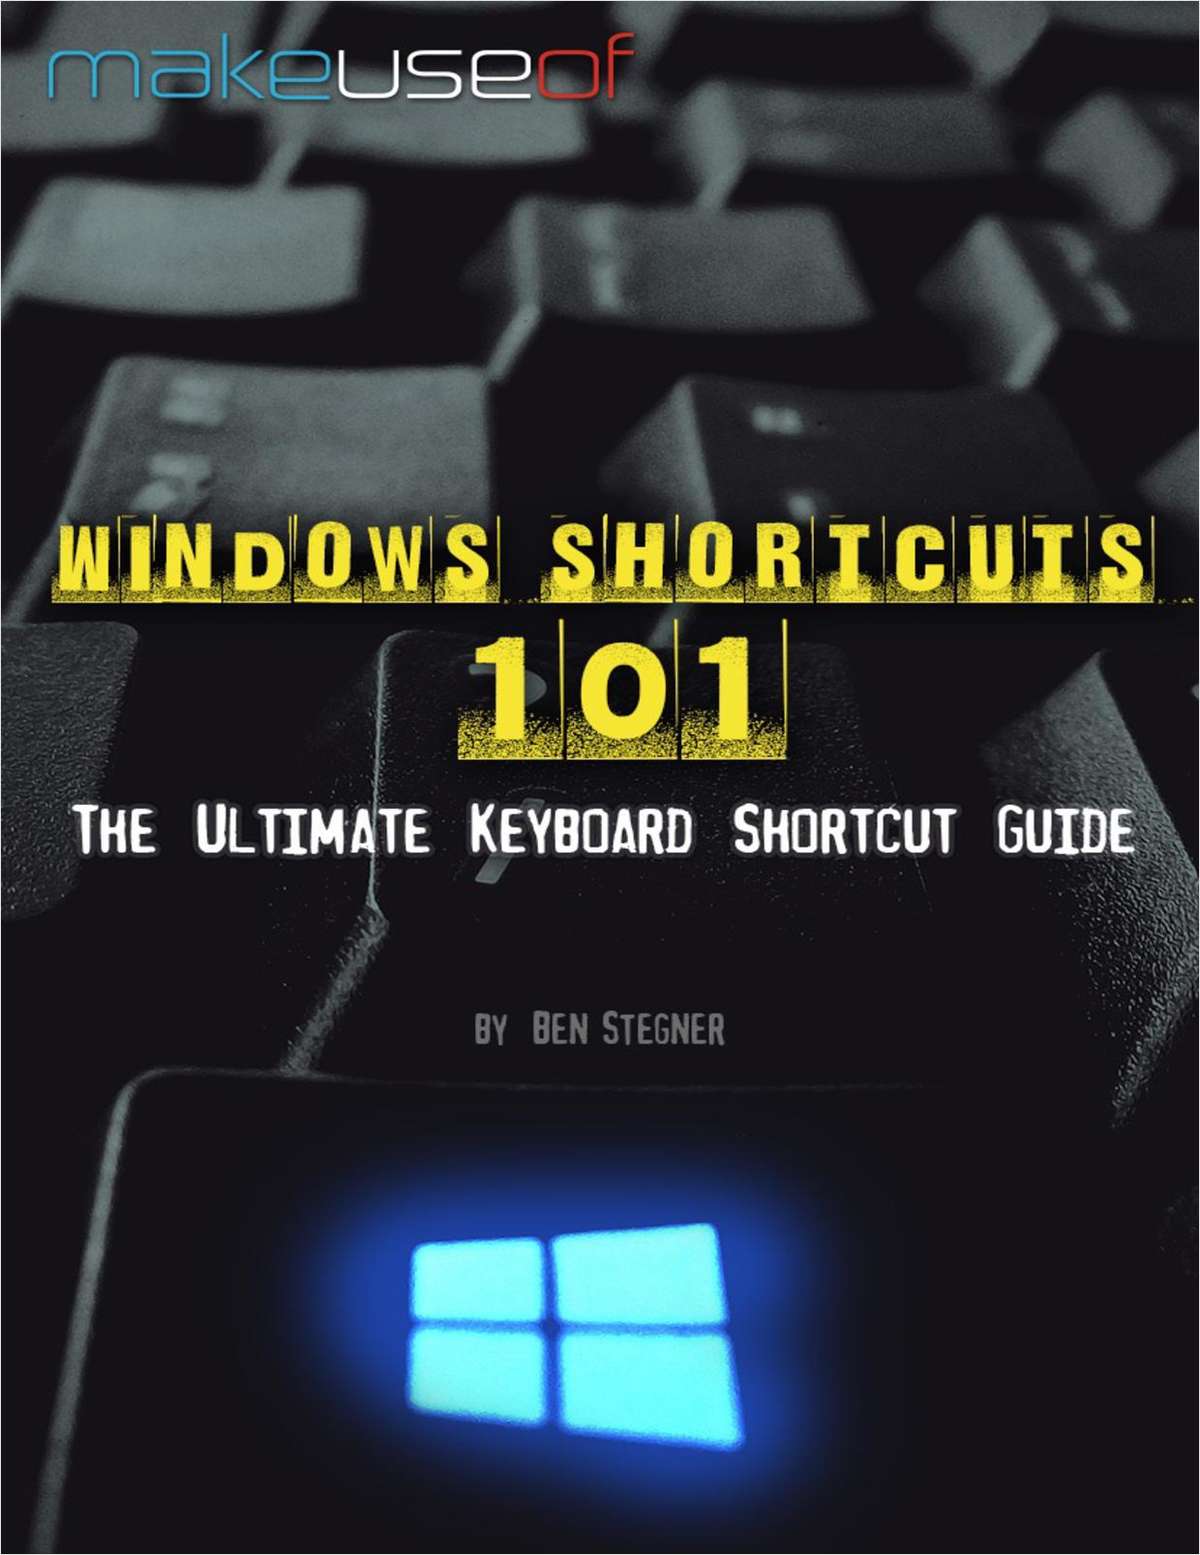 windows shortcuts 101 by ben stegner